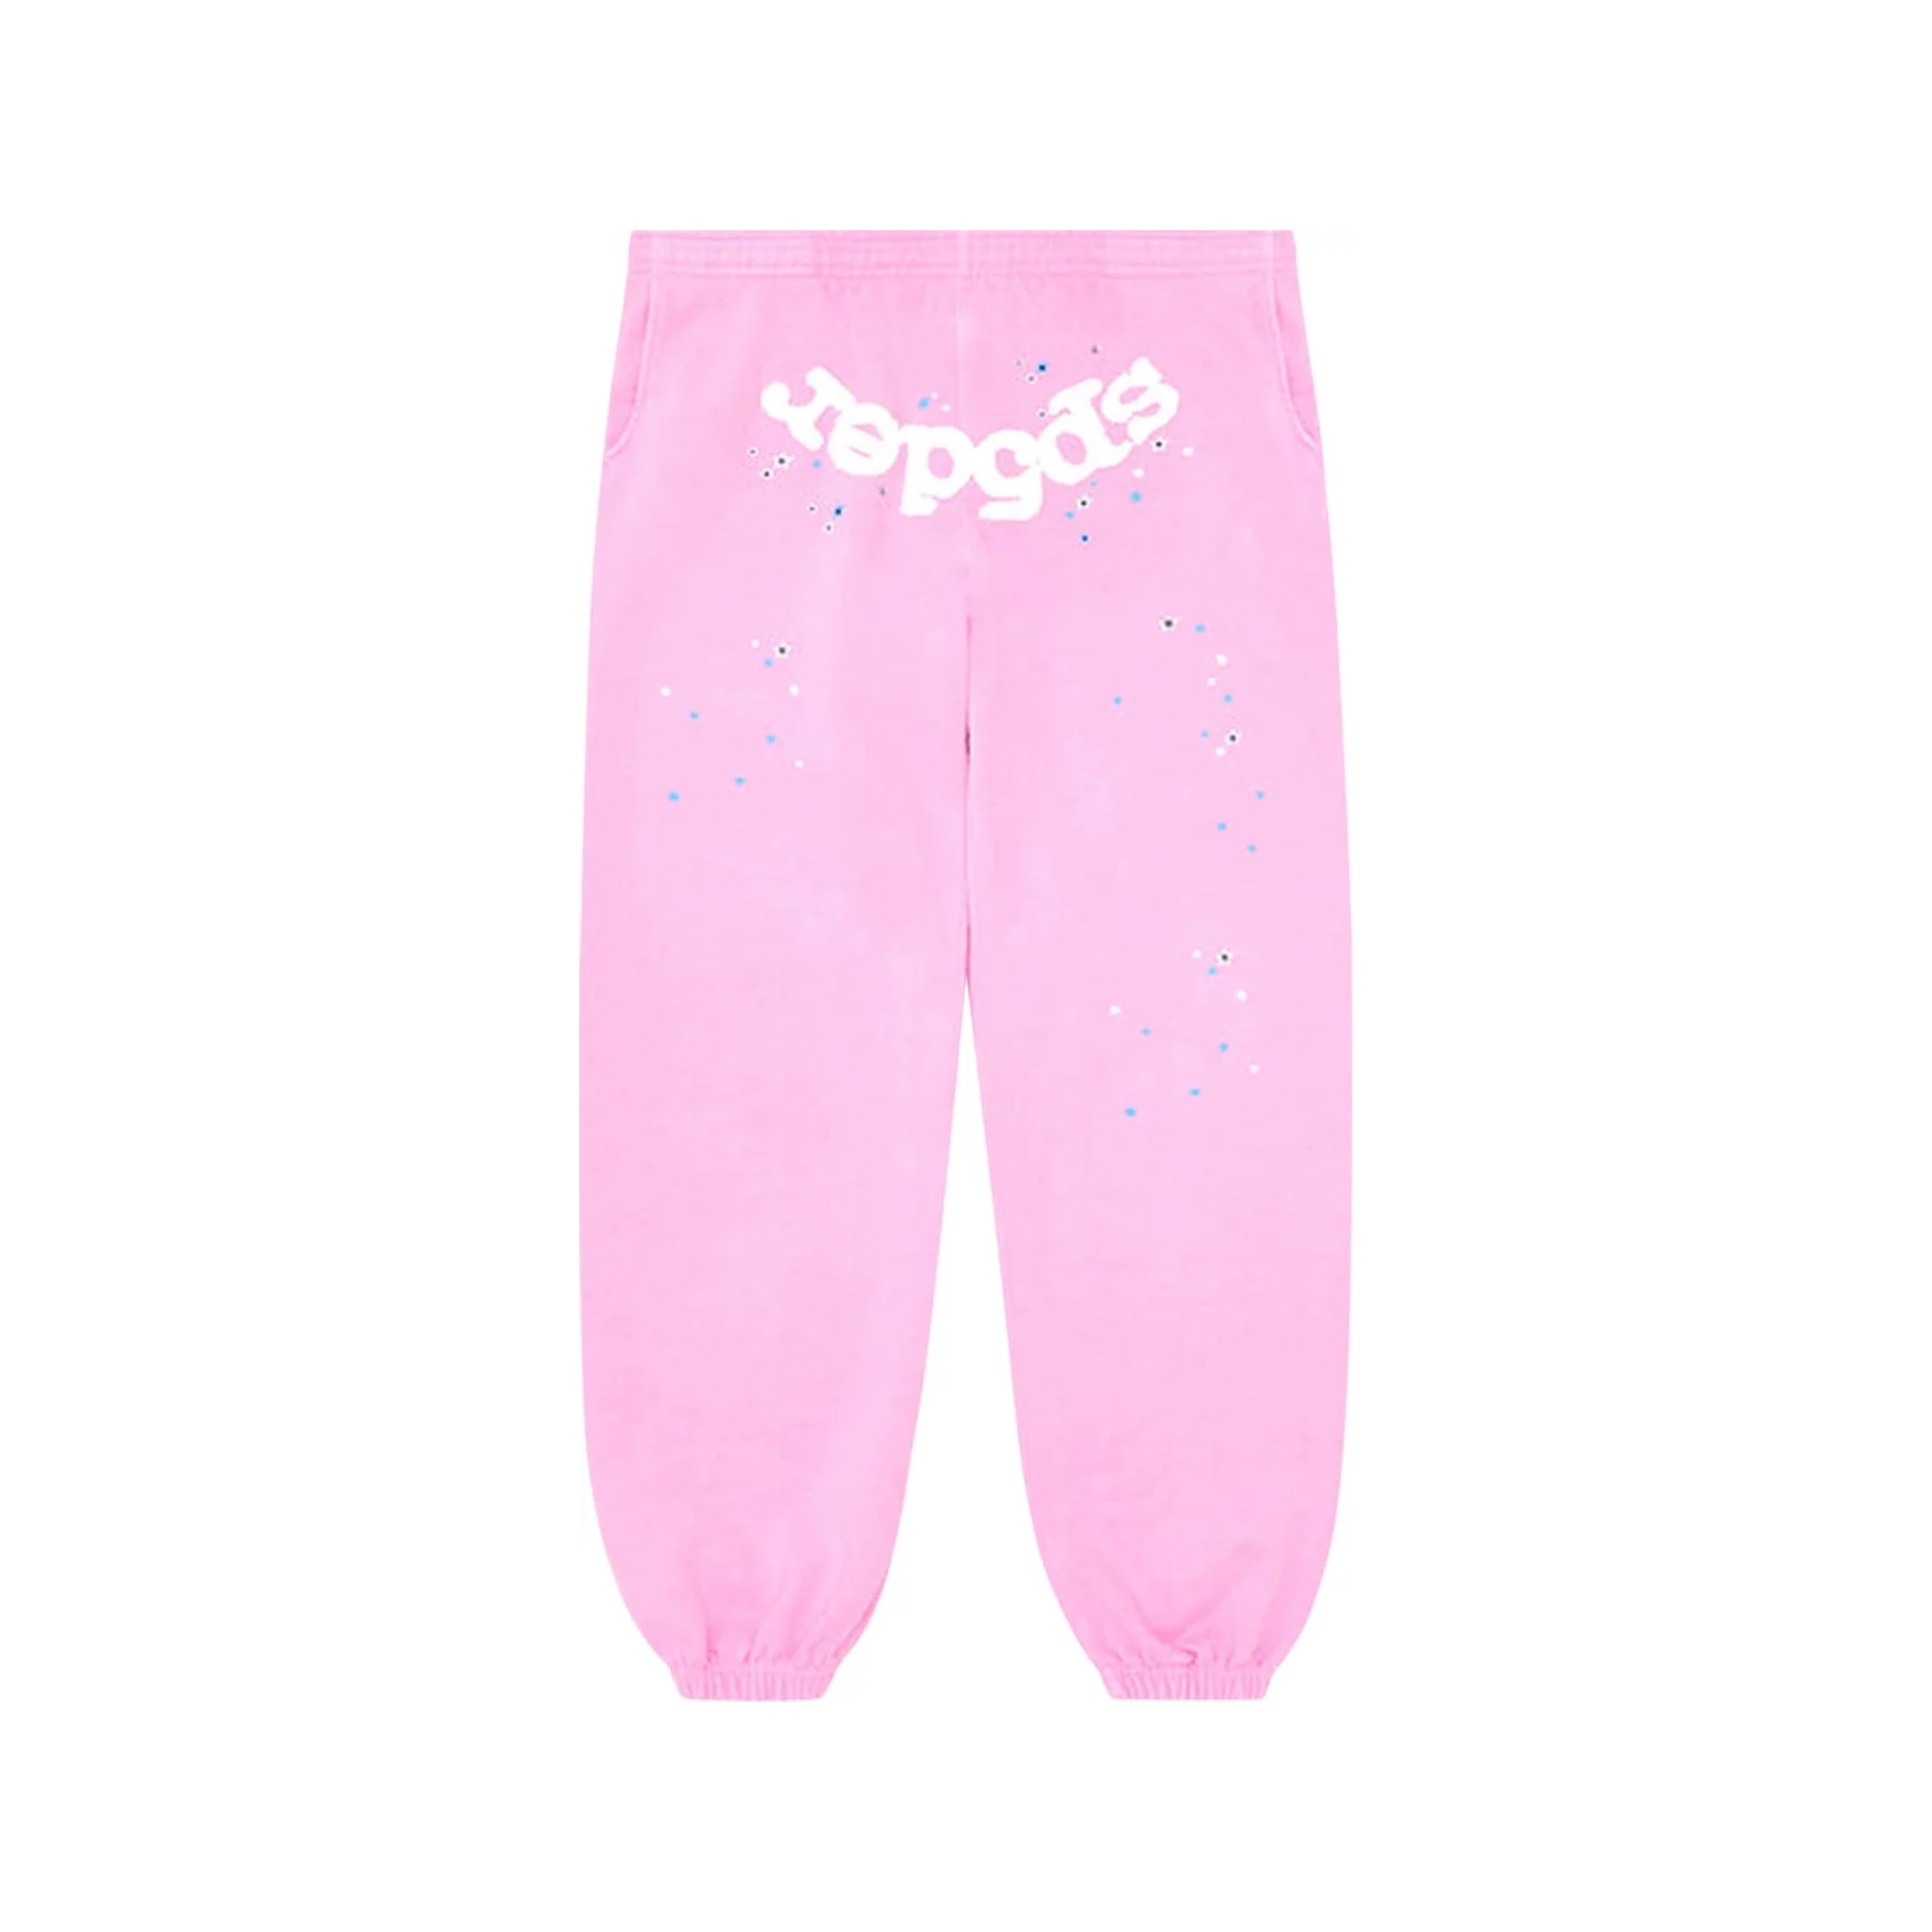 Sp5der Web Sweatpants Pink